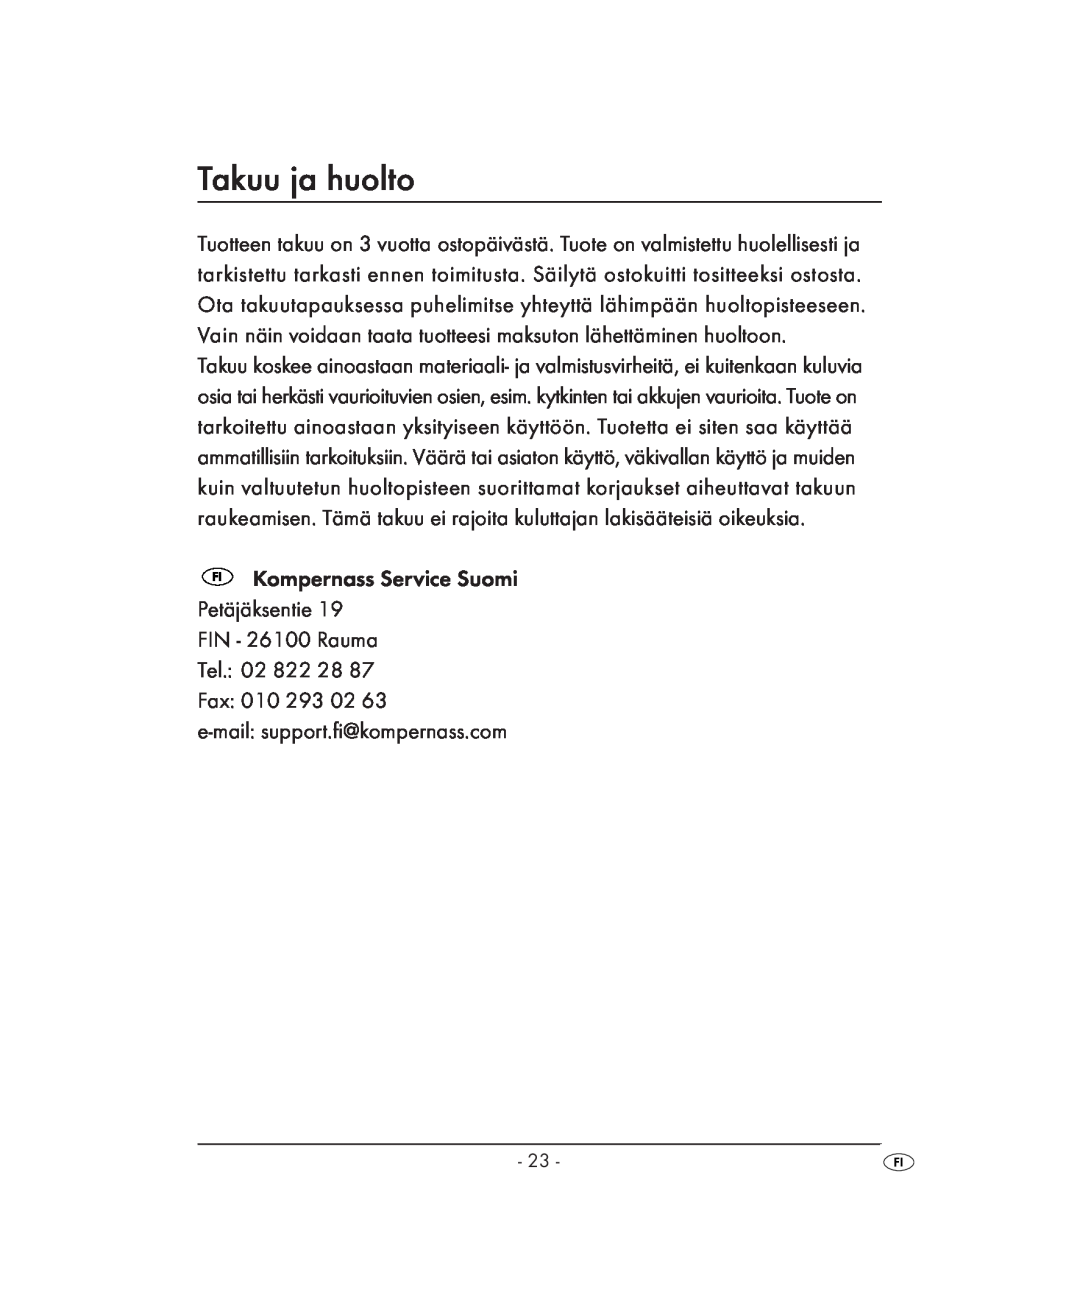 Kompernass KH 2022 manual Takuu ja huolto, Kompernass Service Suomi Petäjäksentie, FIN - 26100 Rauma Tel. 02 822 28 Fax 